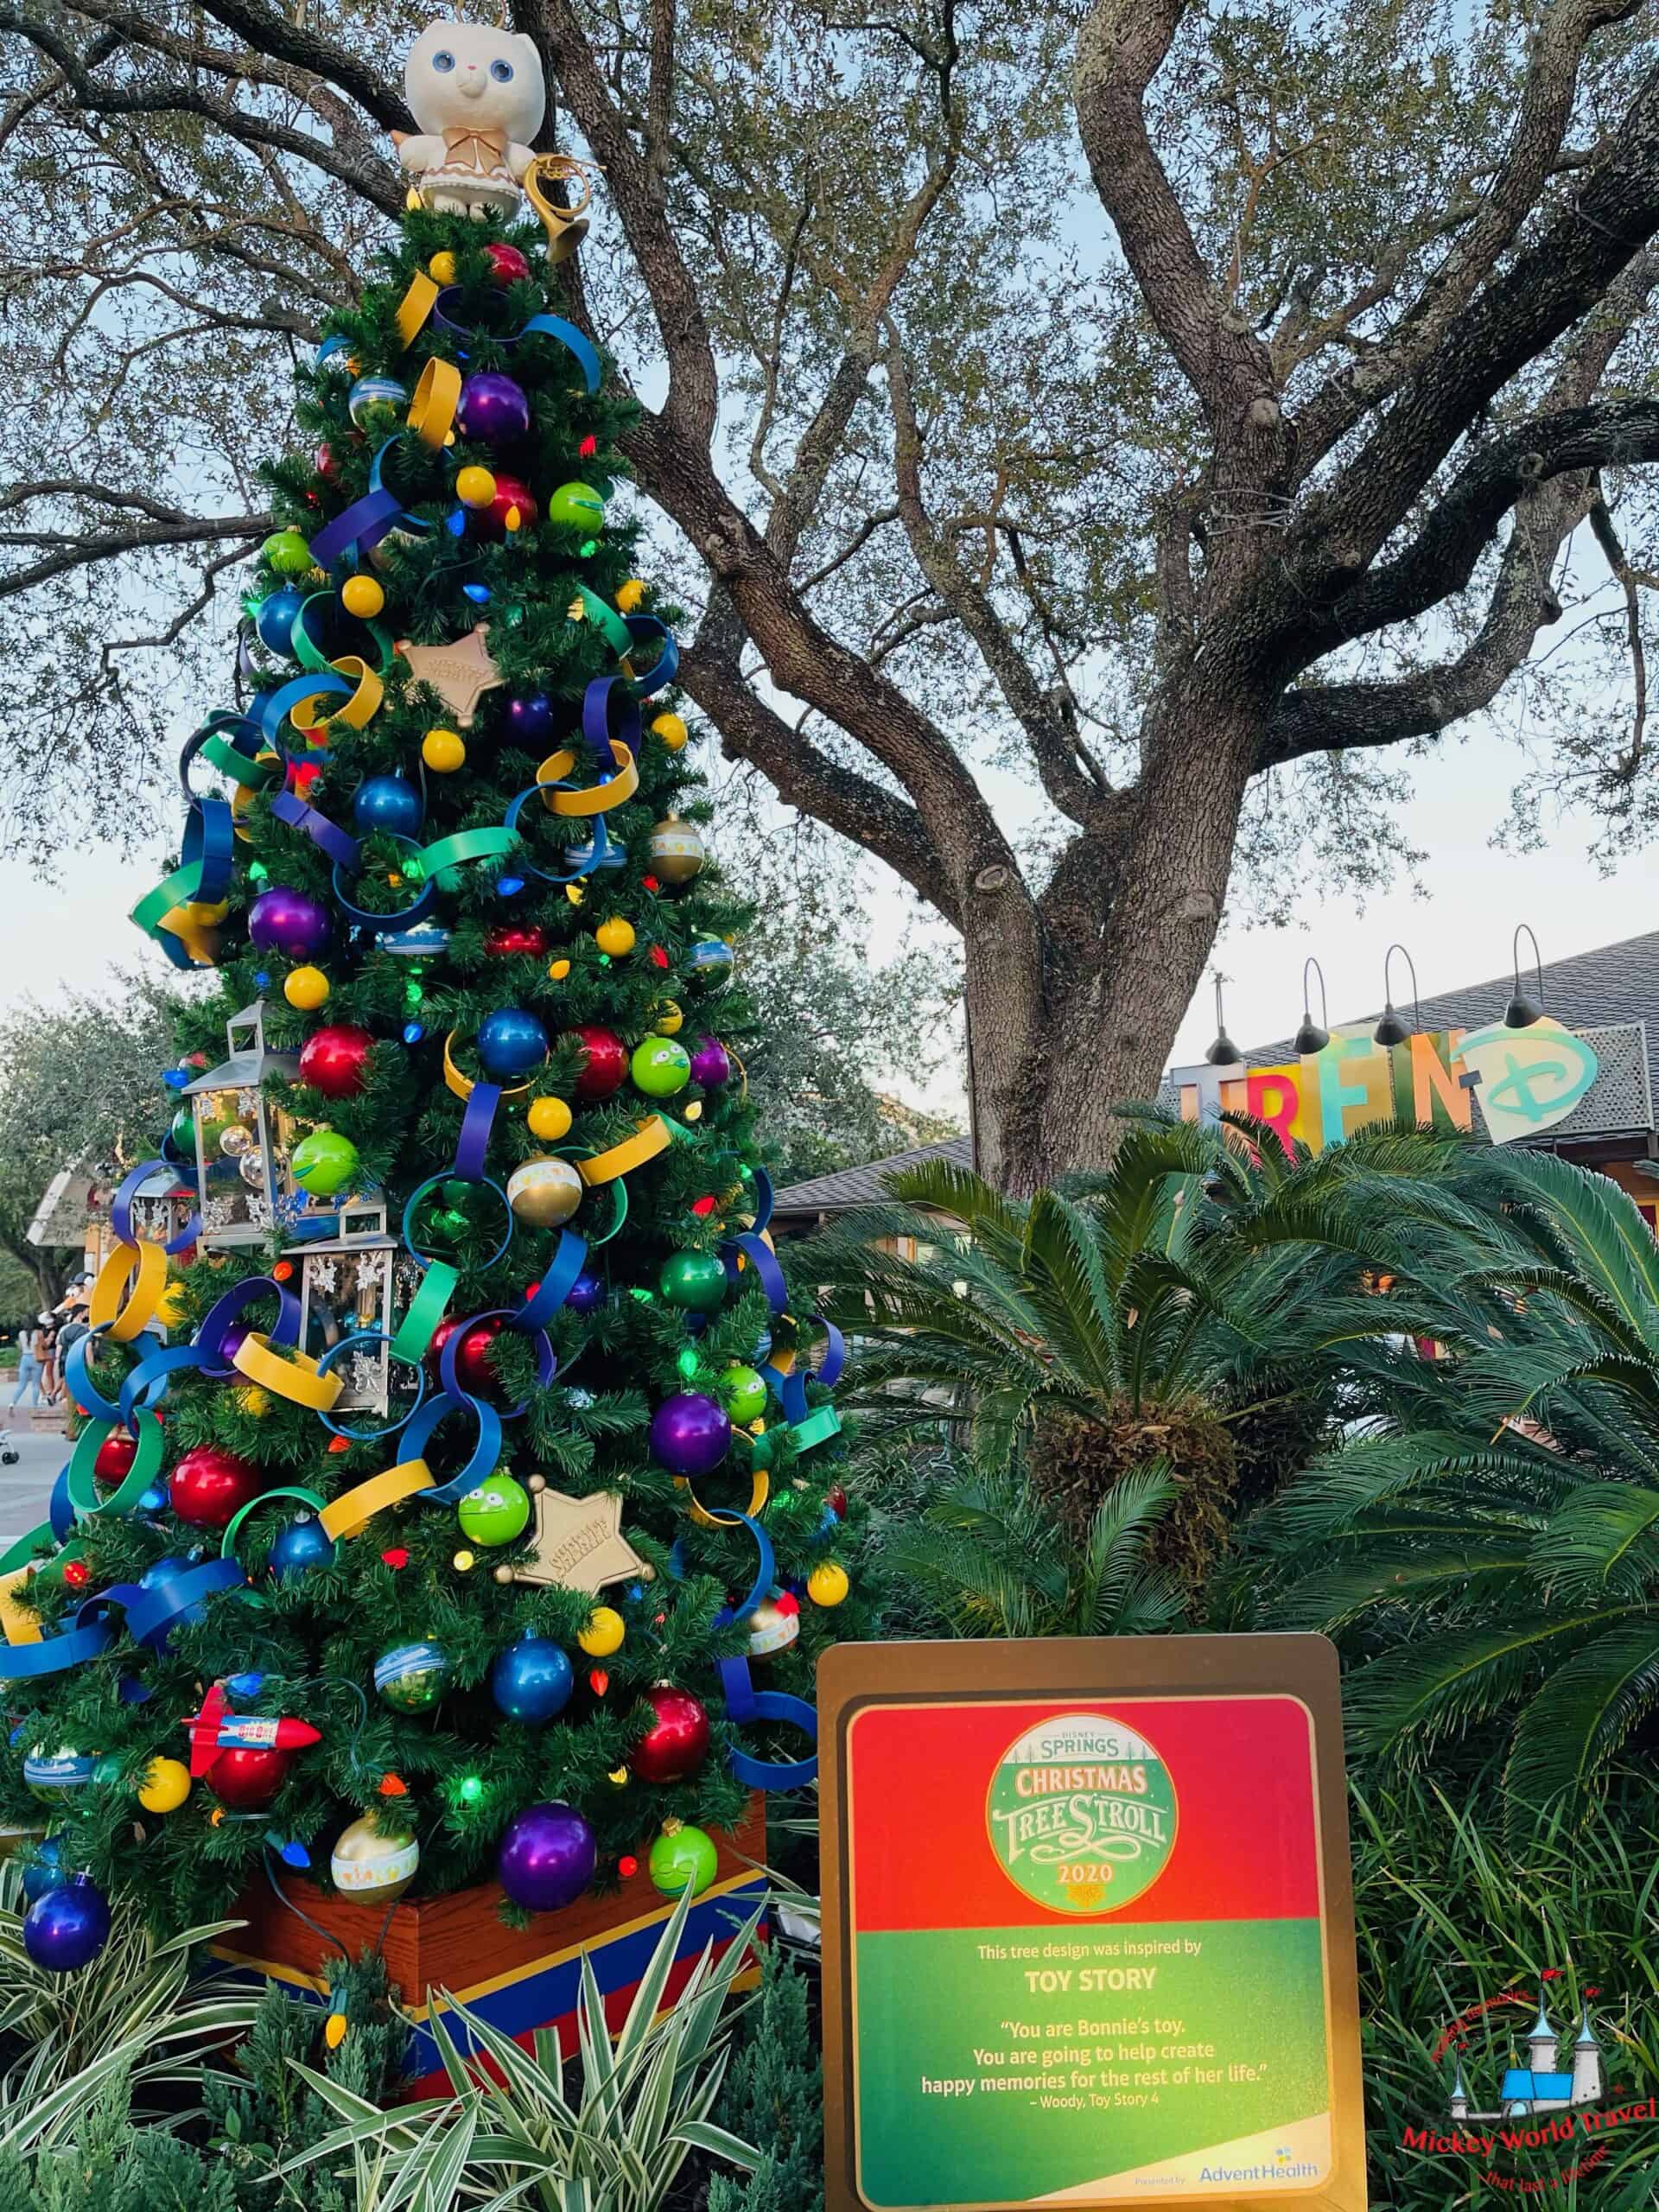 Disney Springs Christmas Tree Trail 2020 5 scaled